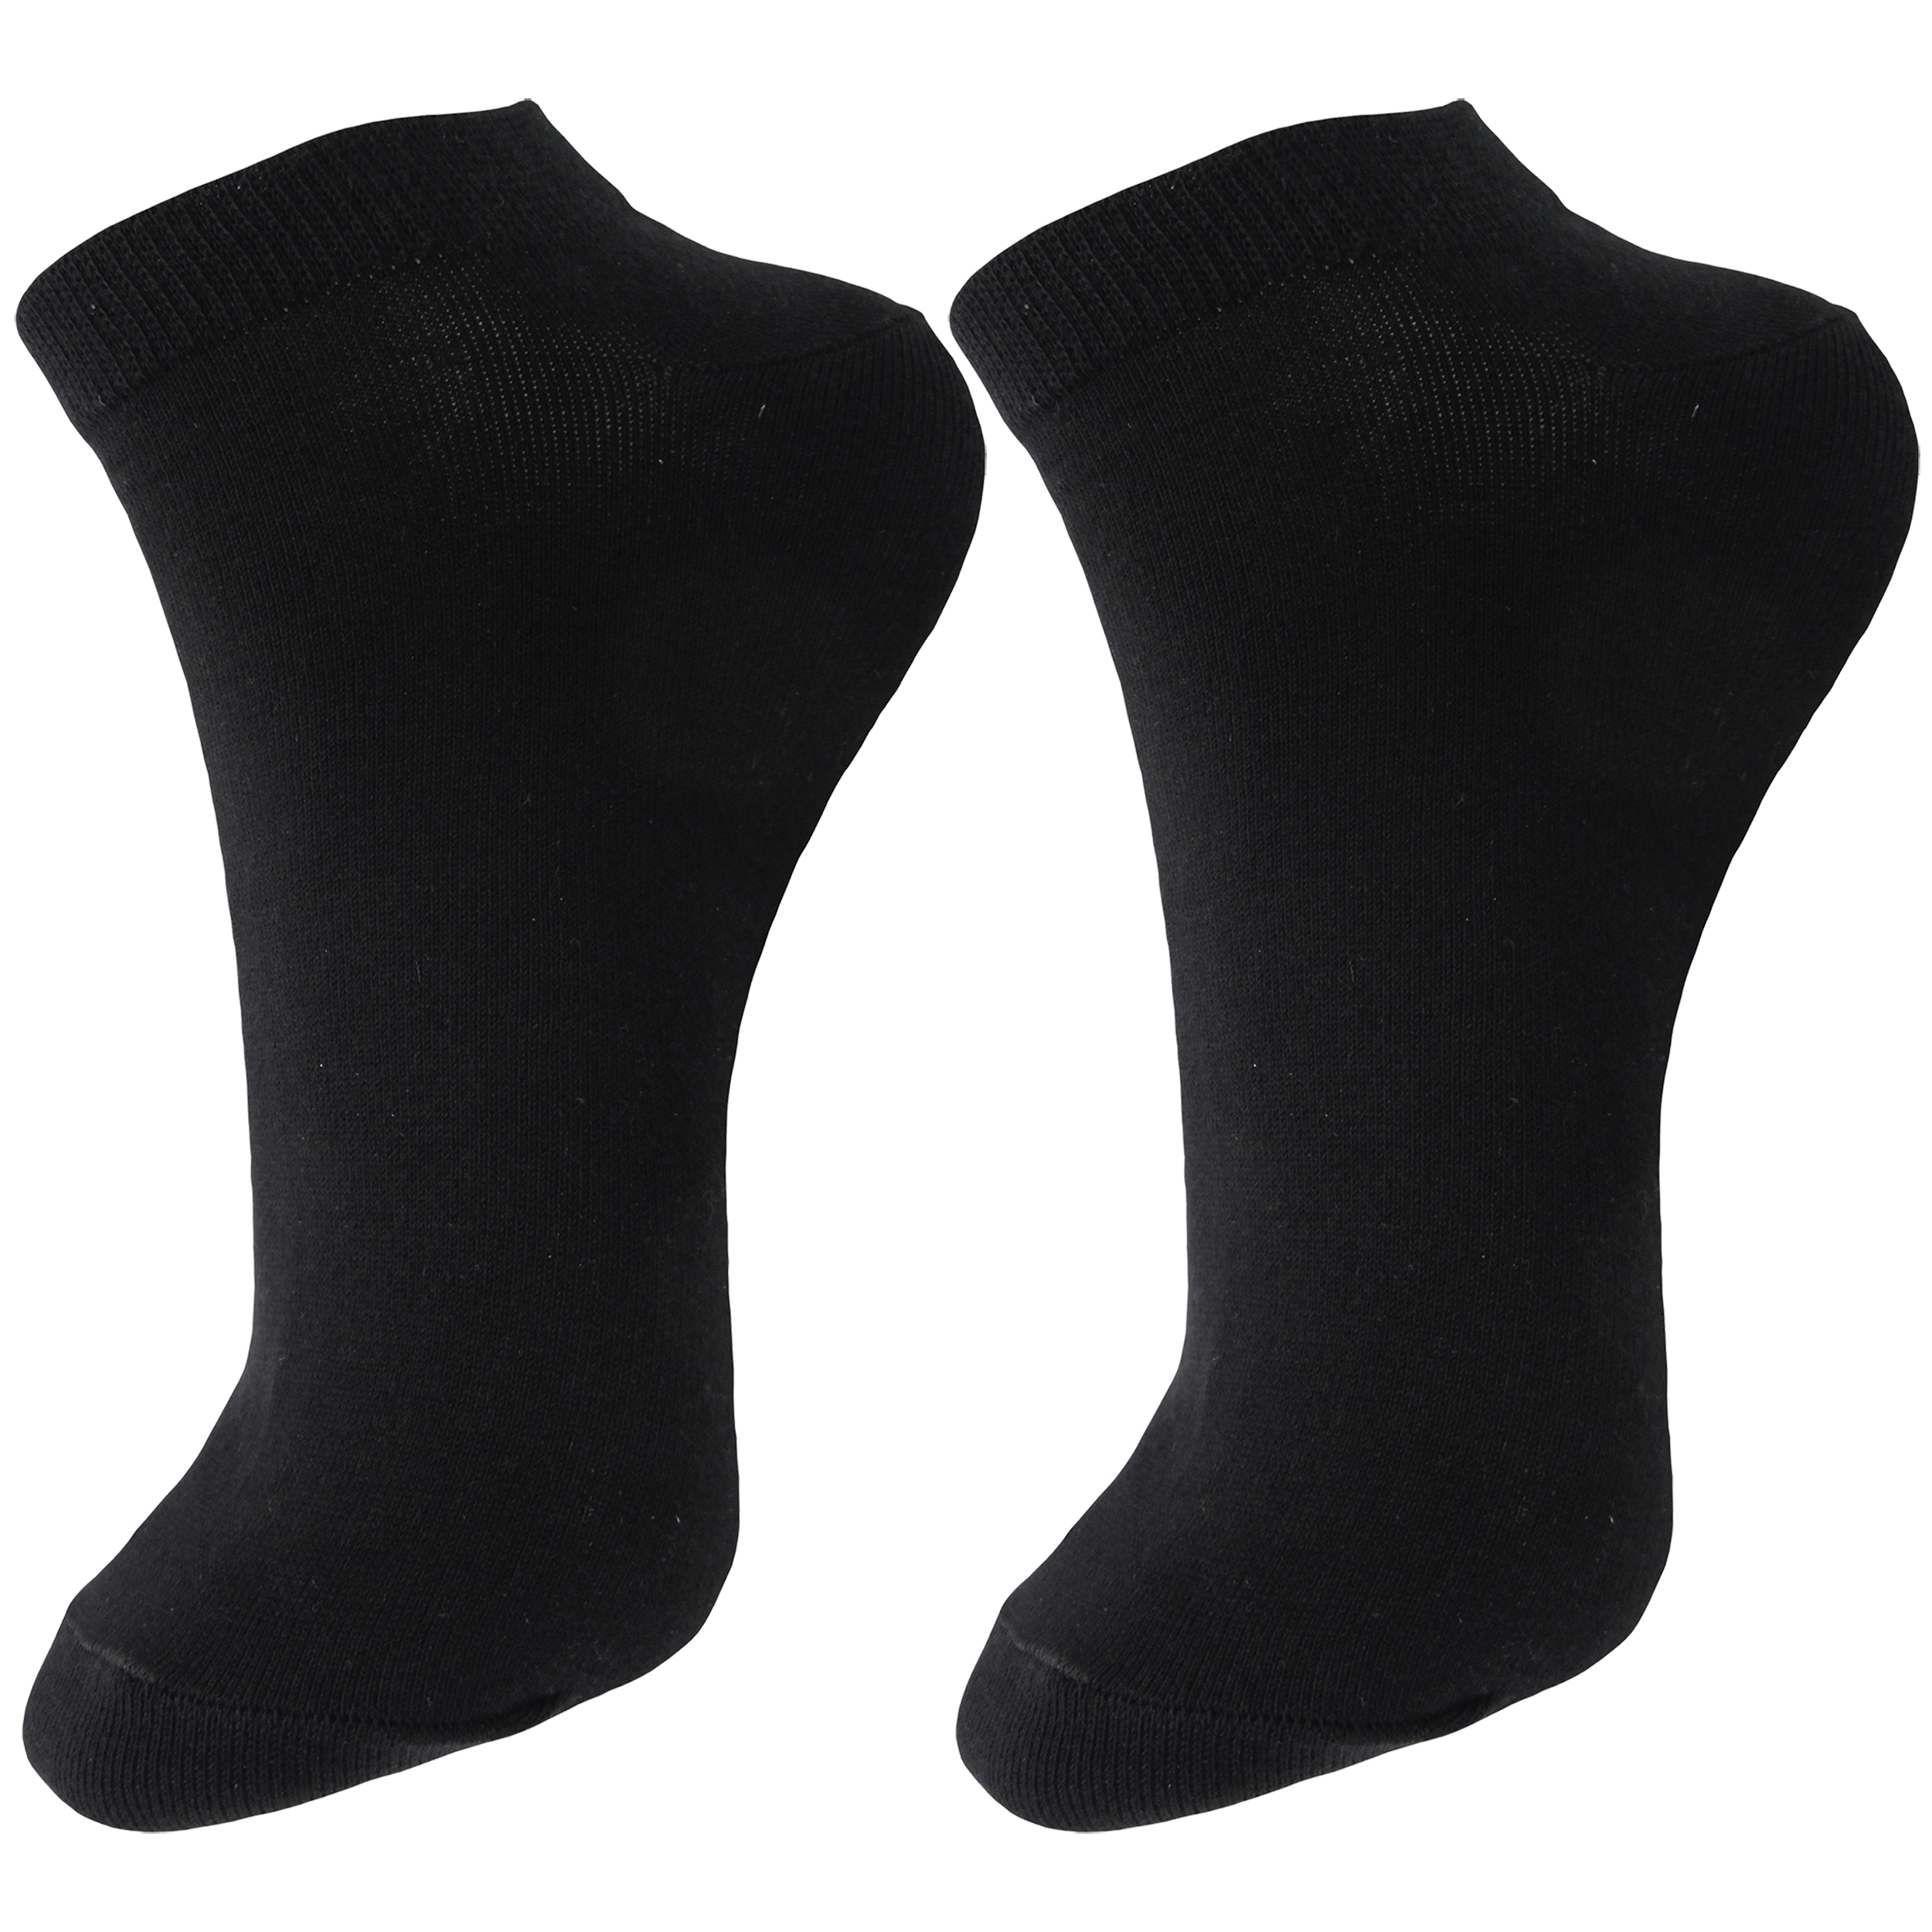 جوراب ساق کوتاه مردانه ادیب مدل کلاسیک کد 02001 رنگ مشکی بسته 2 عددی